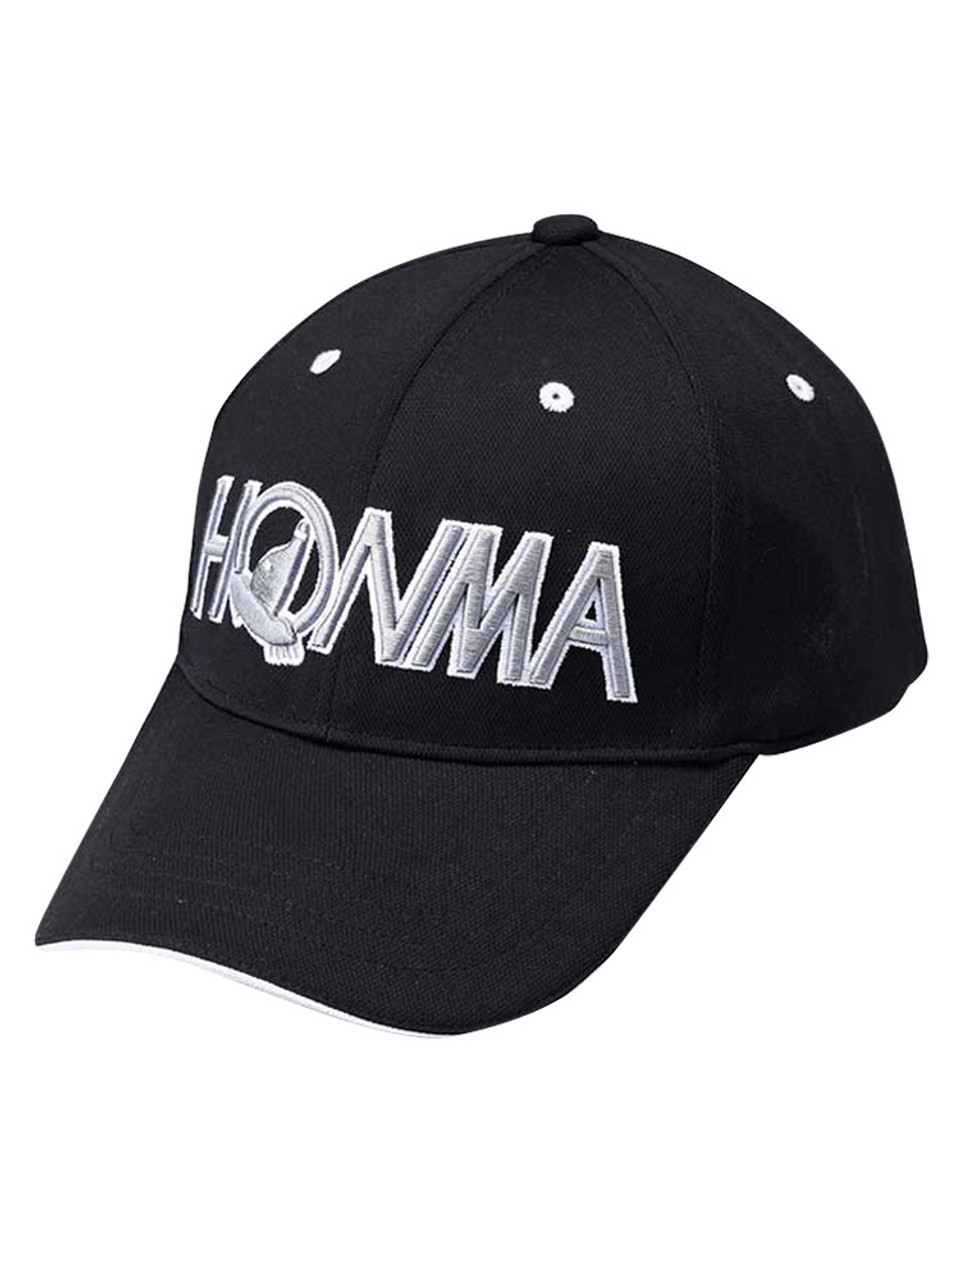 Honma Solid Cap 031-735628 - Black/Silver - Mens | GolfBox